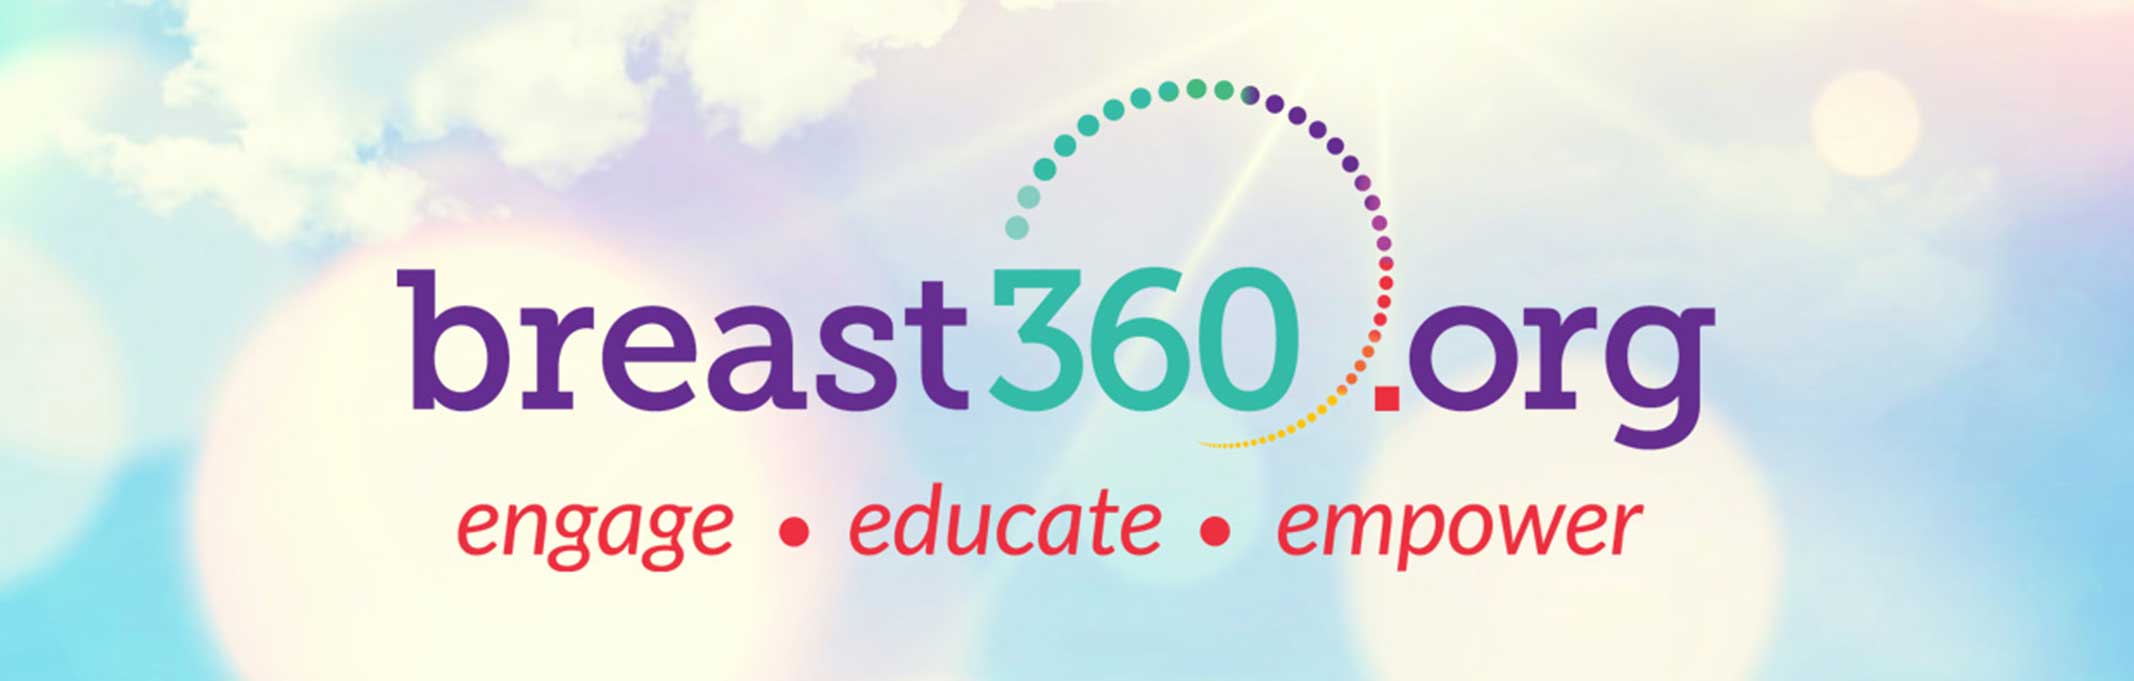 Breast360.org